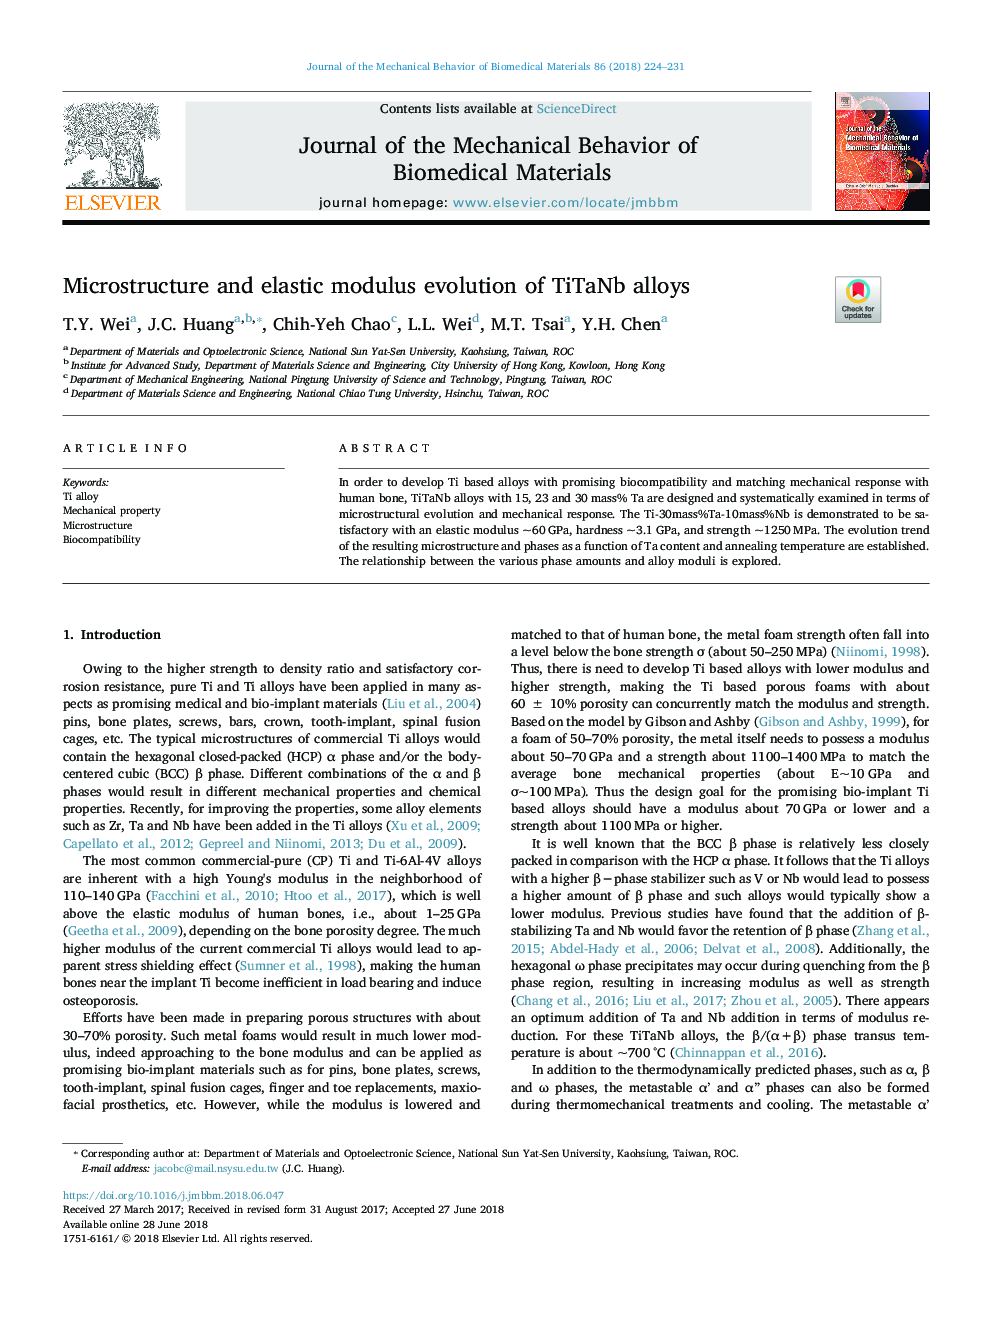 Microstructure and elastic modulus evolution of TiTaNb alloys